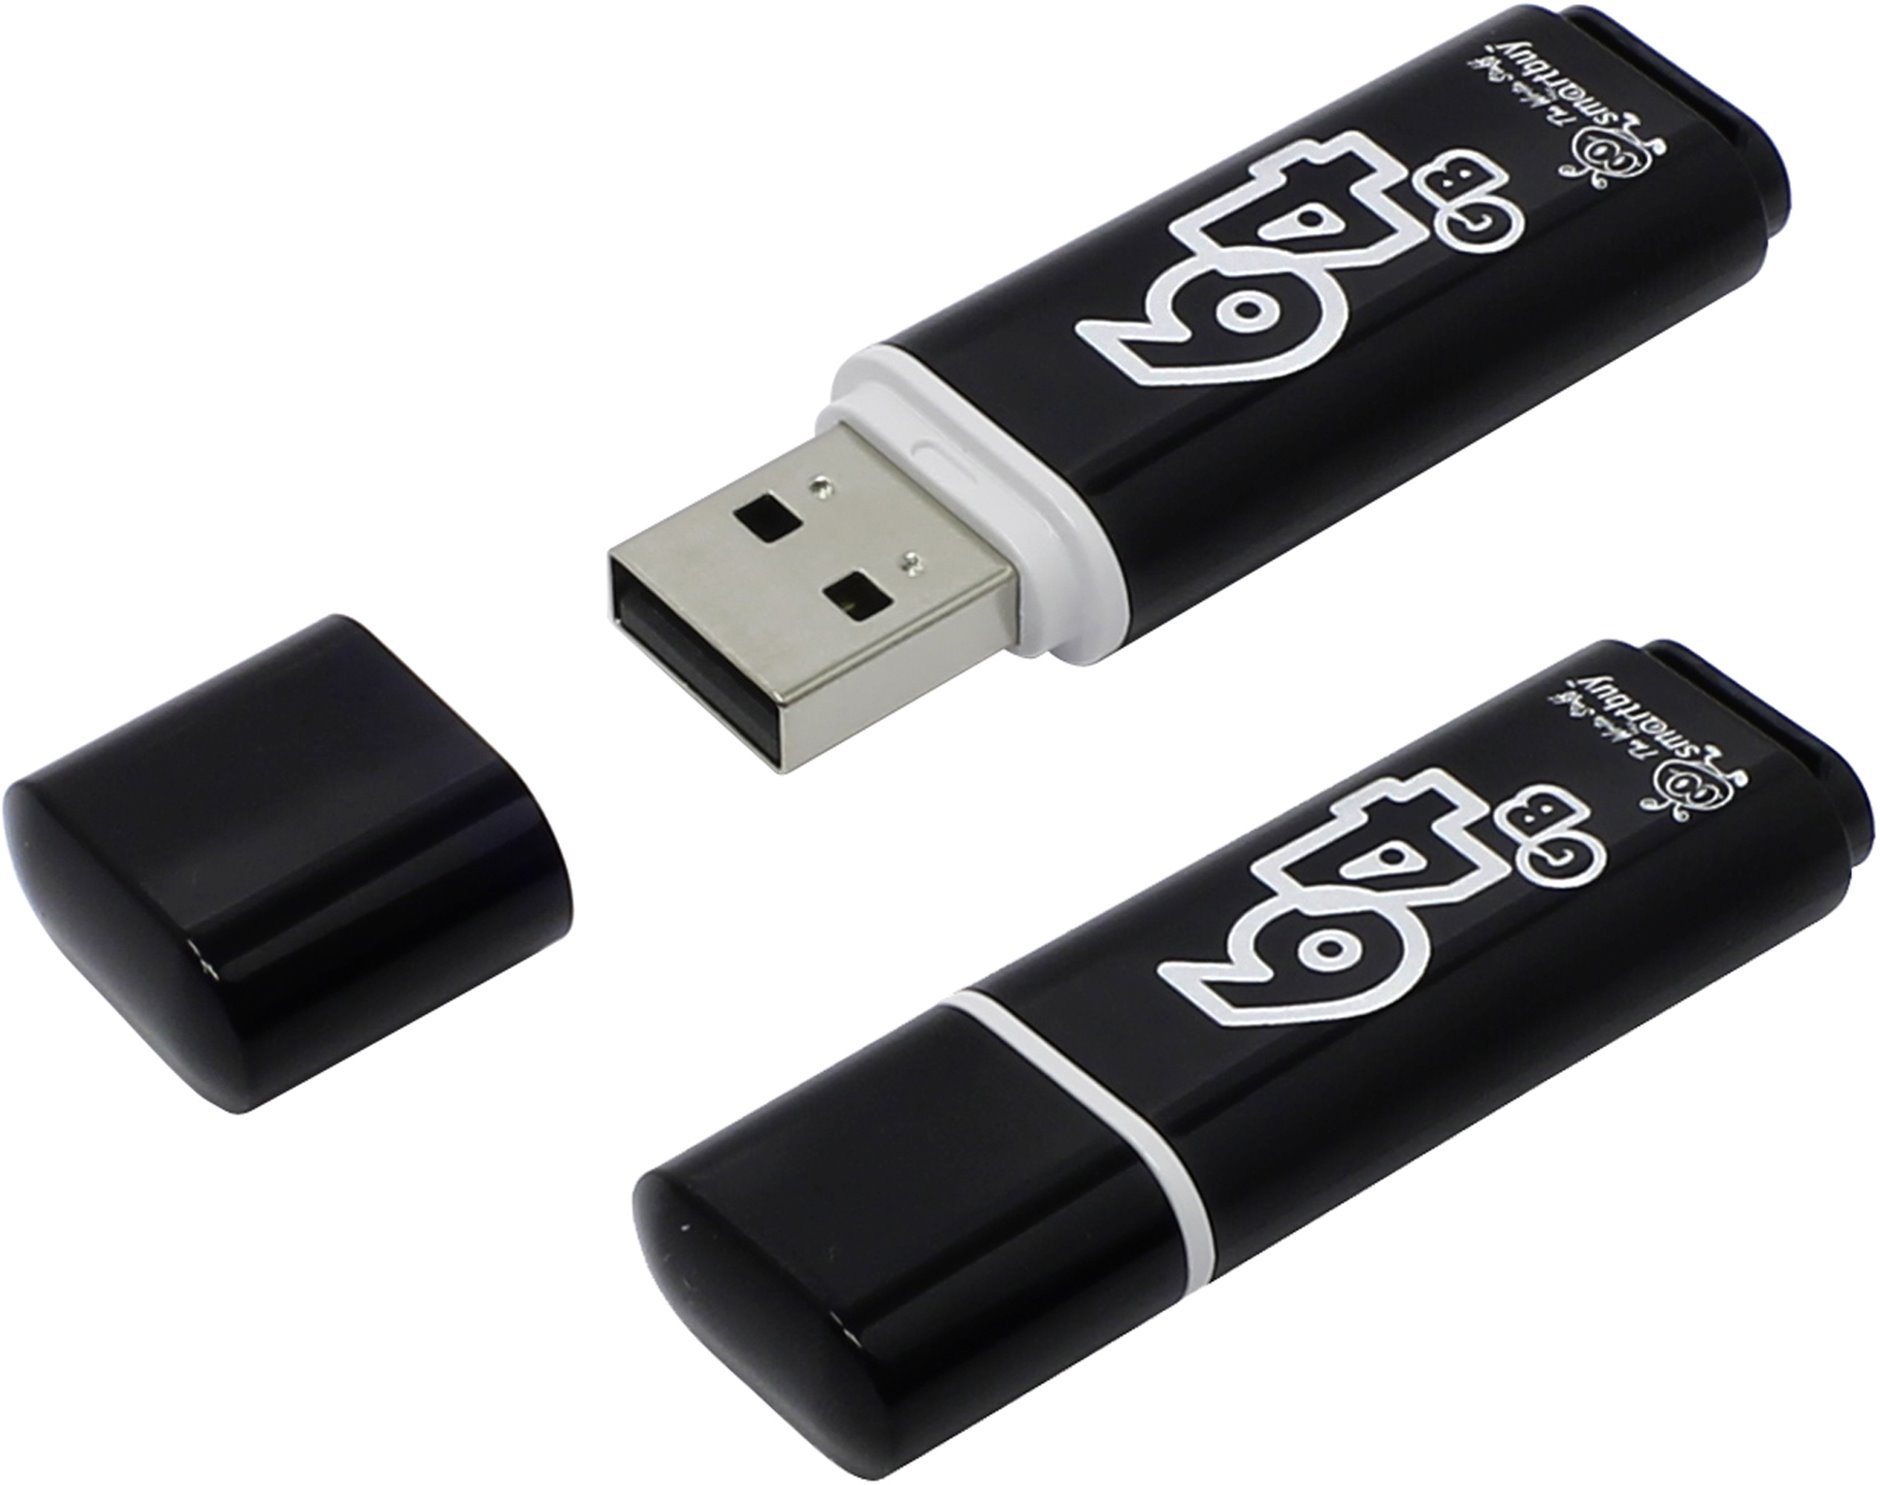 USB 2.0 флэш-диск Smartbuy Glossy series Black 64GB